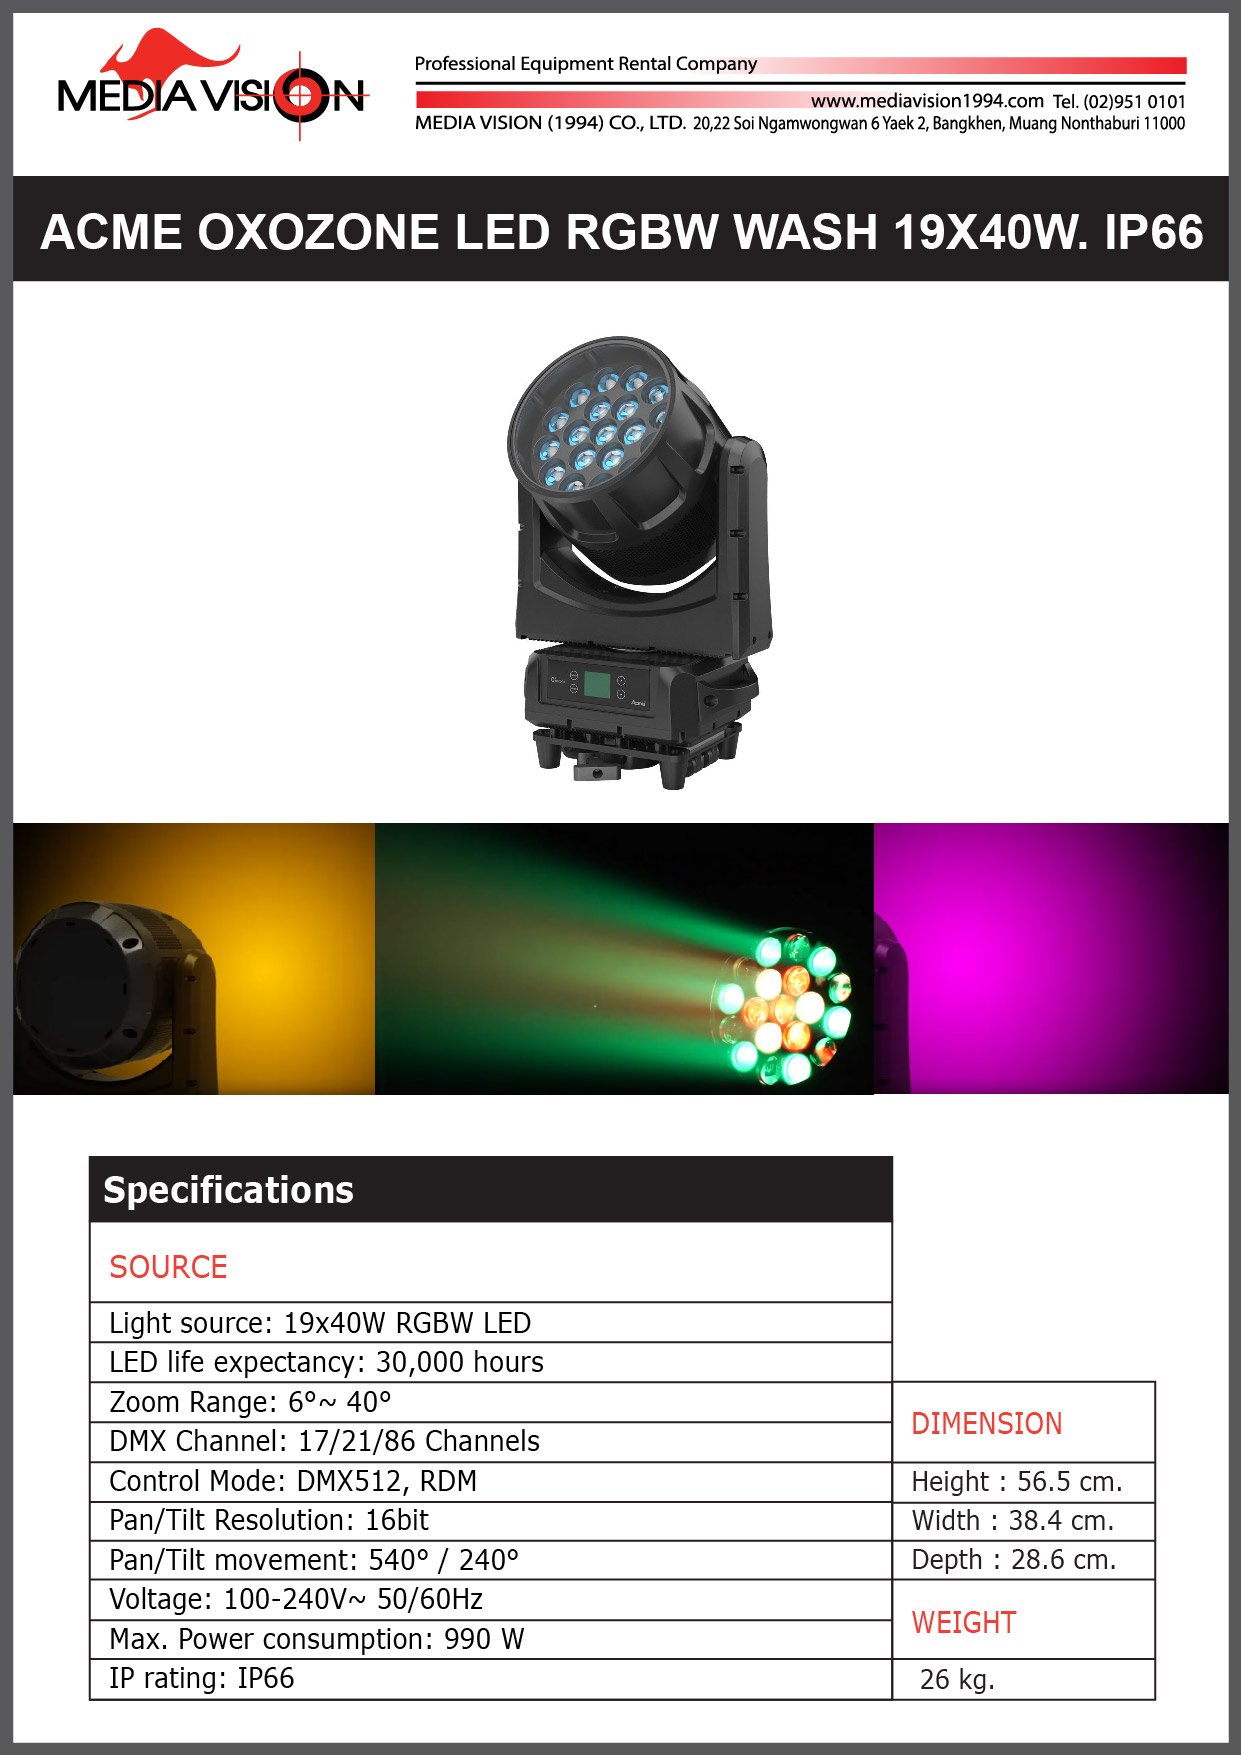 ACME OXOZONE LED RGBW WASH 19x40W. IP66